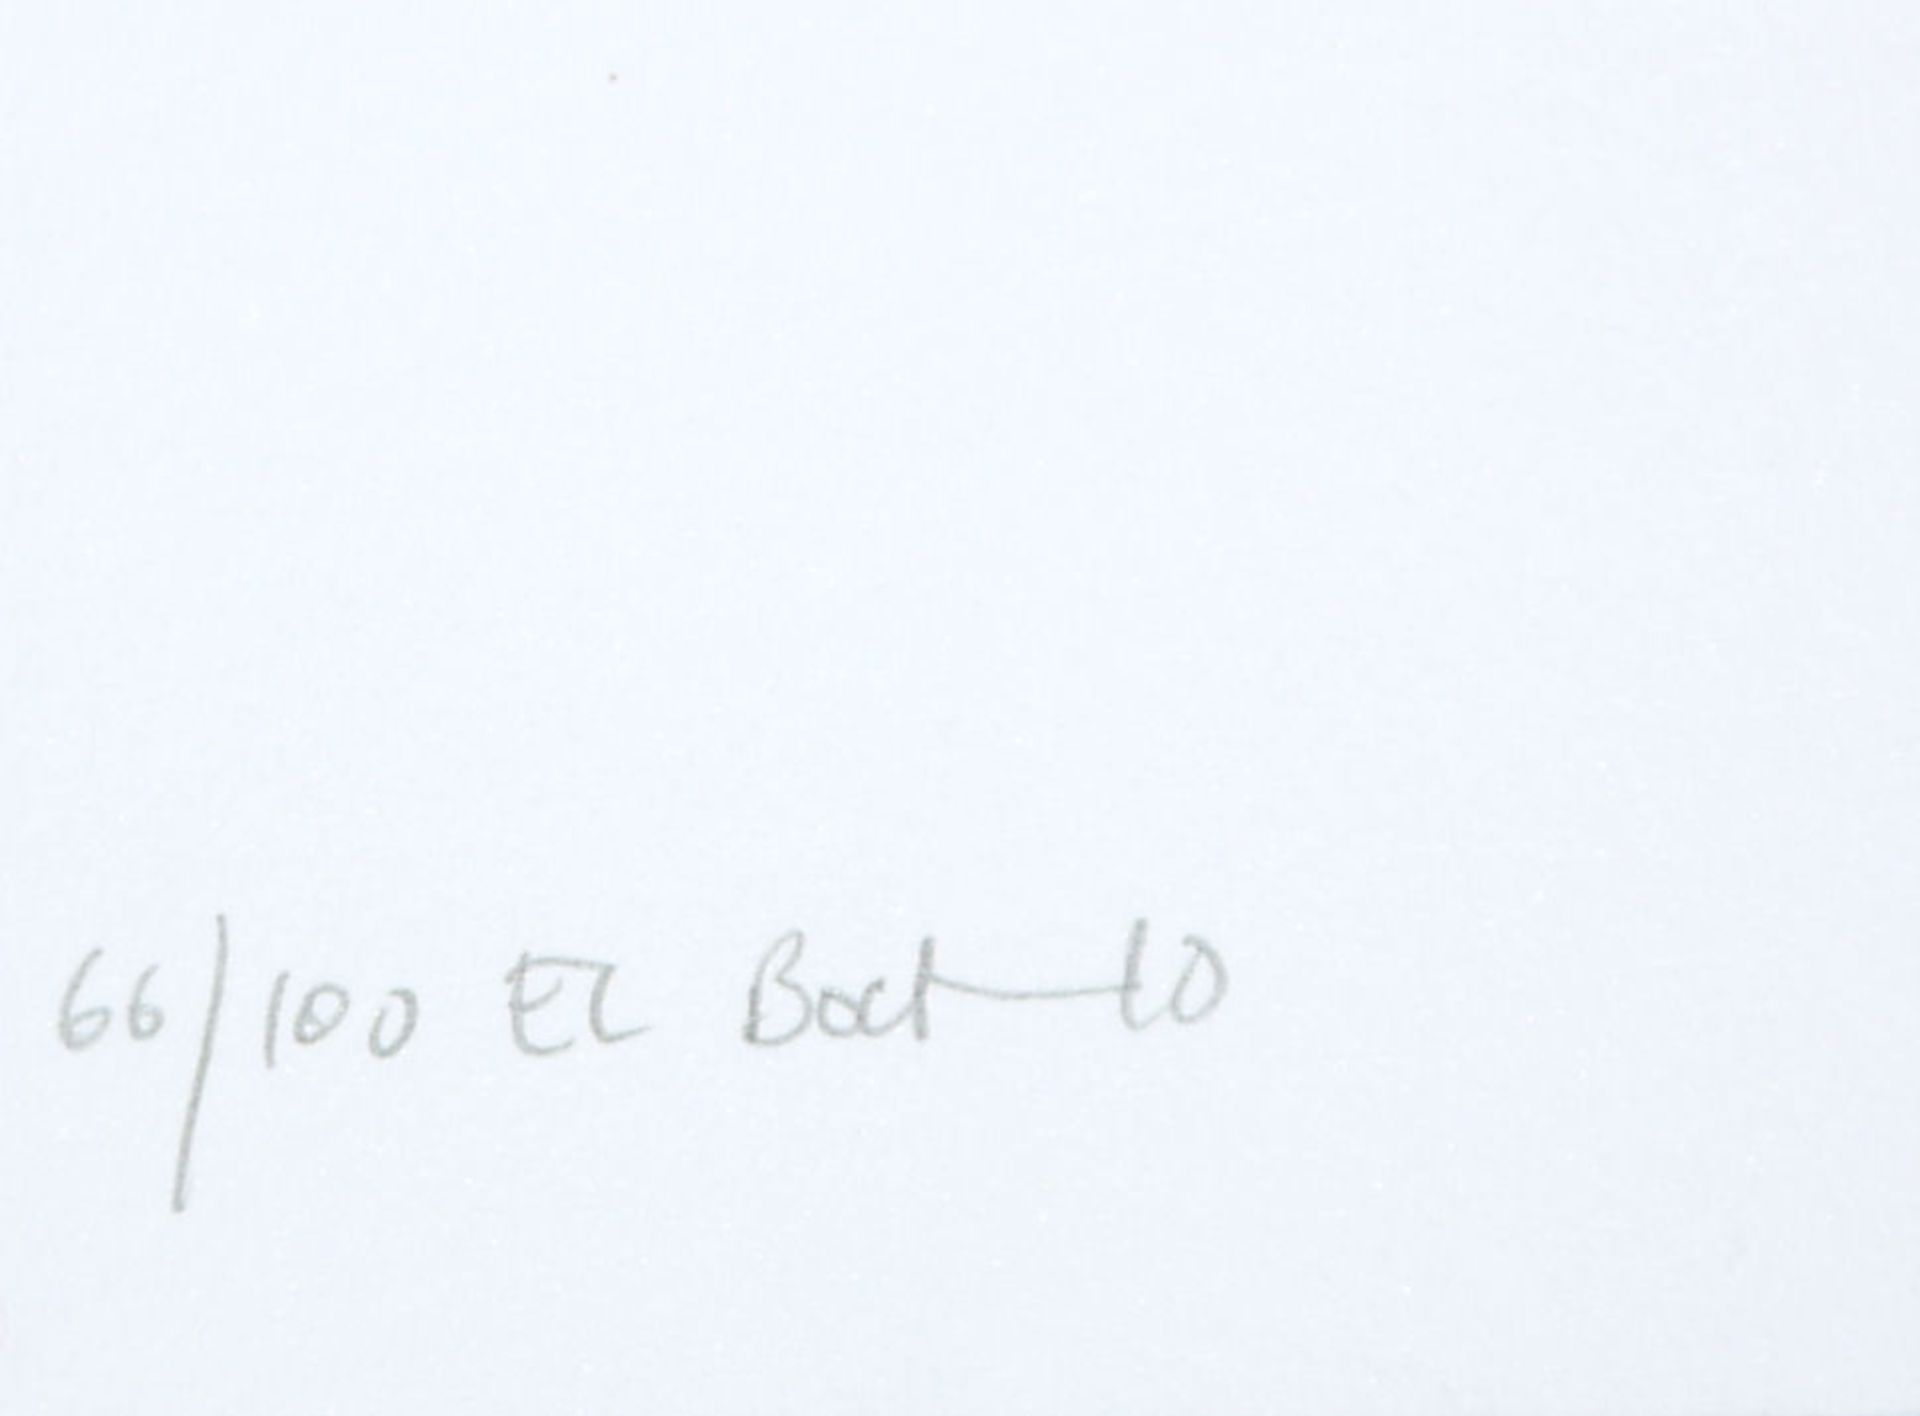 El Bocho, "I miss my Plattenbau", signed fine art print - Image 3 of 3